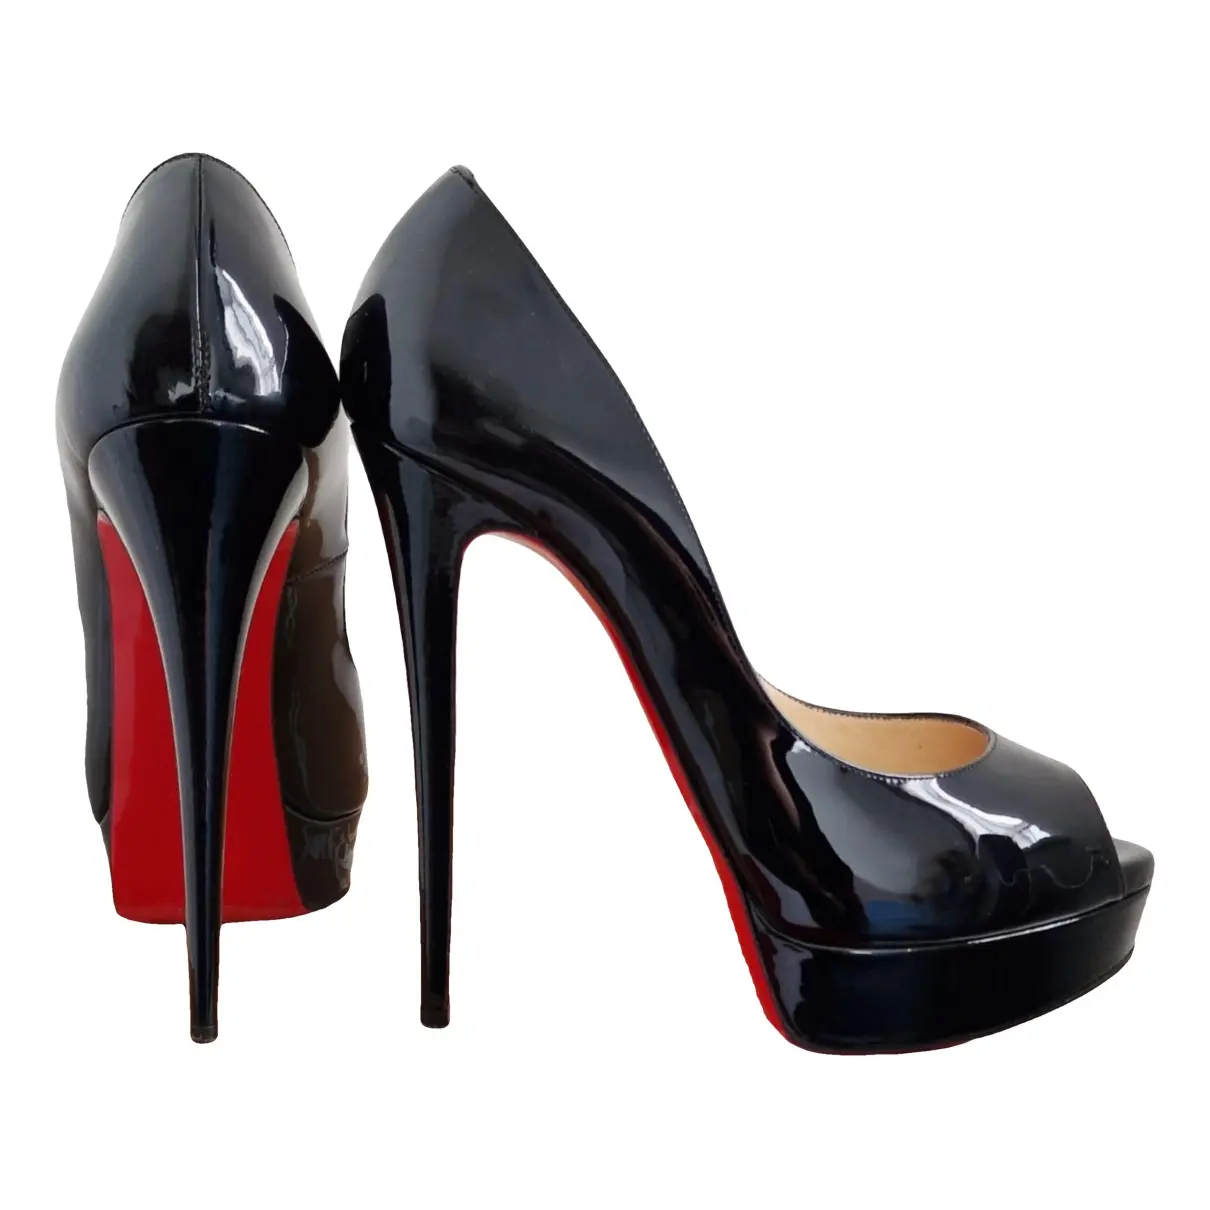 Lady Peep patent leather heels